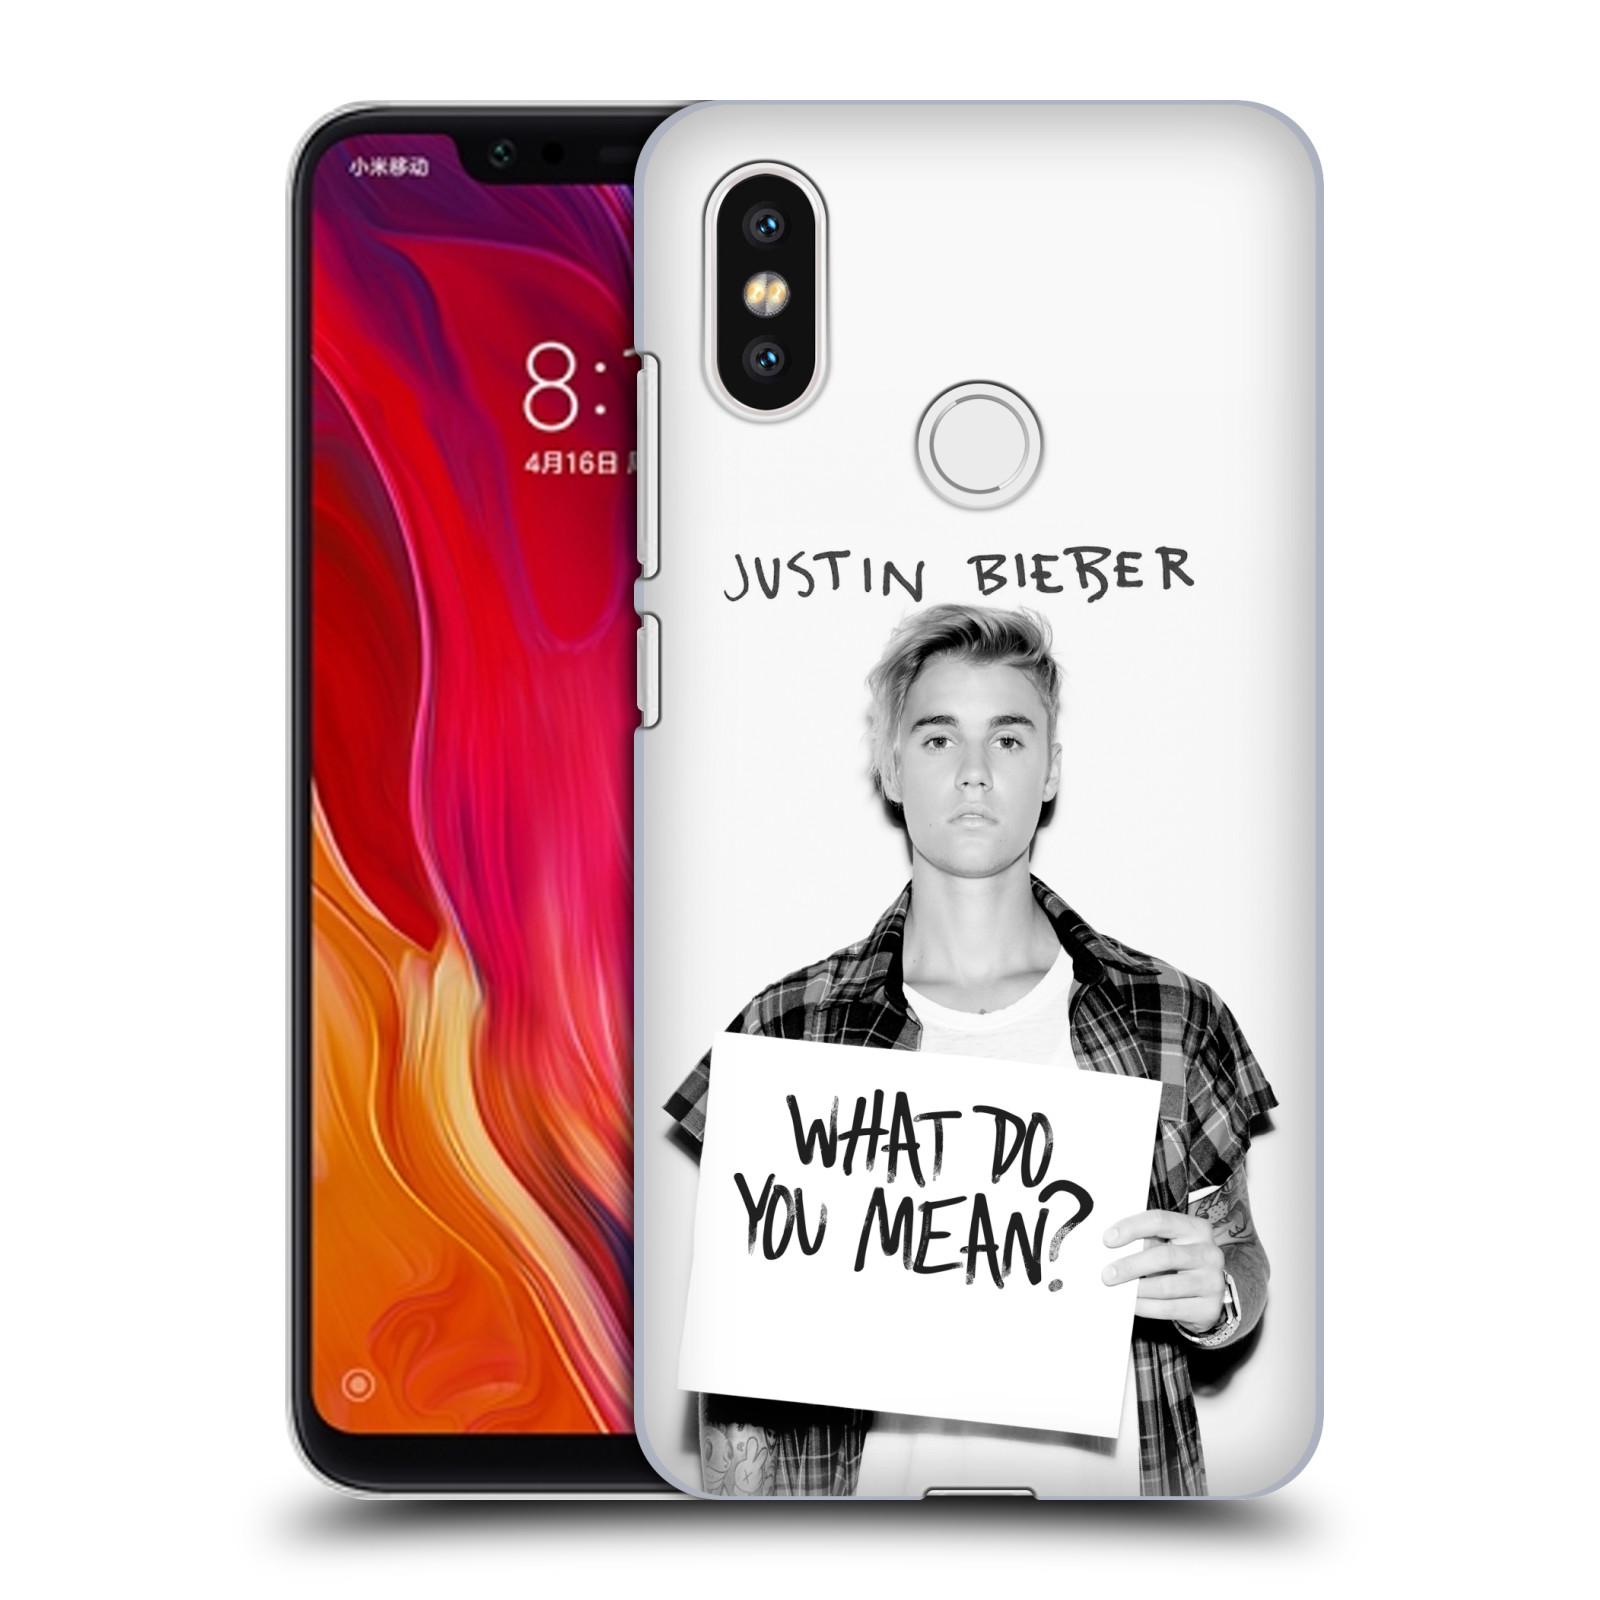 HEAD CASE plastový obal na mobil Xiaomi Mi 8 Justin Bieber foto Purpose What do you mean